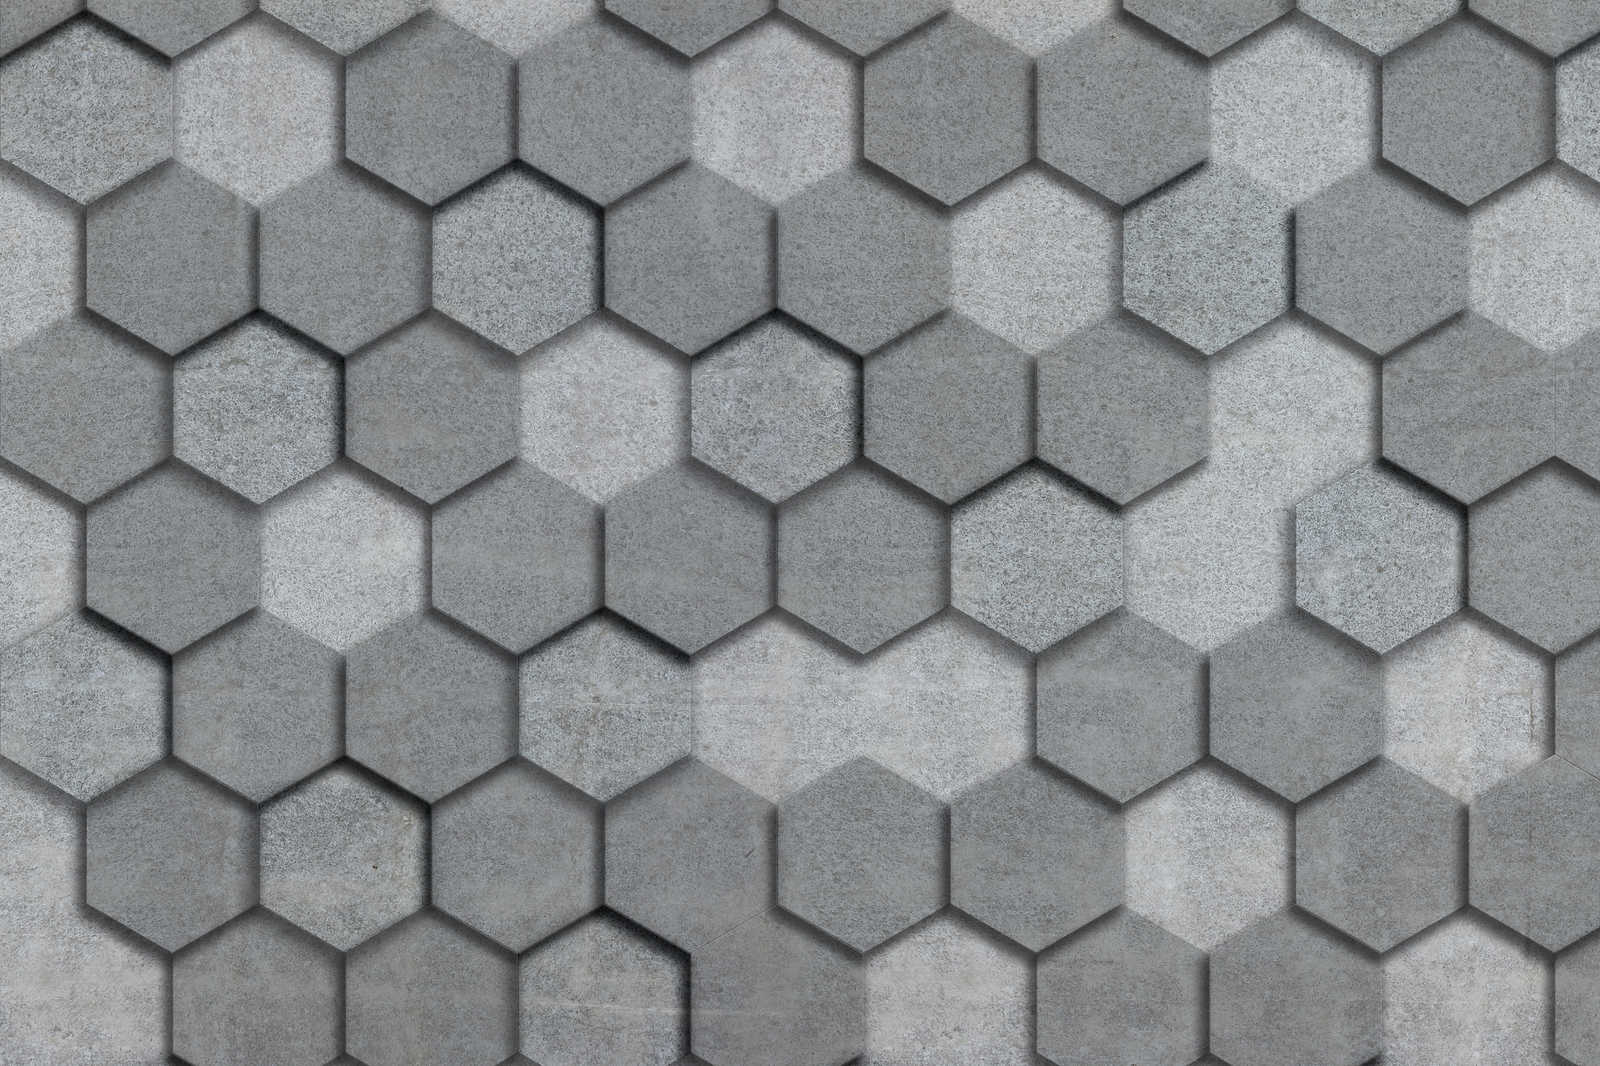             Cuadro lienzo con azulejos geométricos hexagonales aspecto 3D | gris, plata - 0,90 m x 0,60 m
        